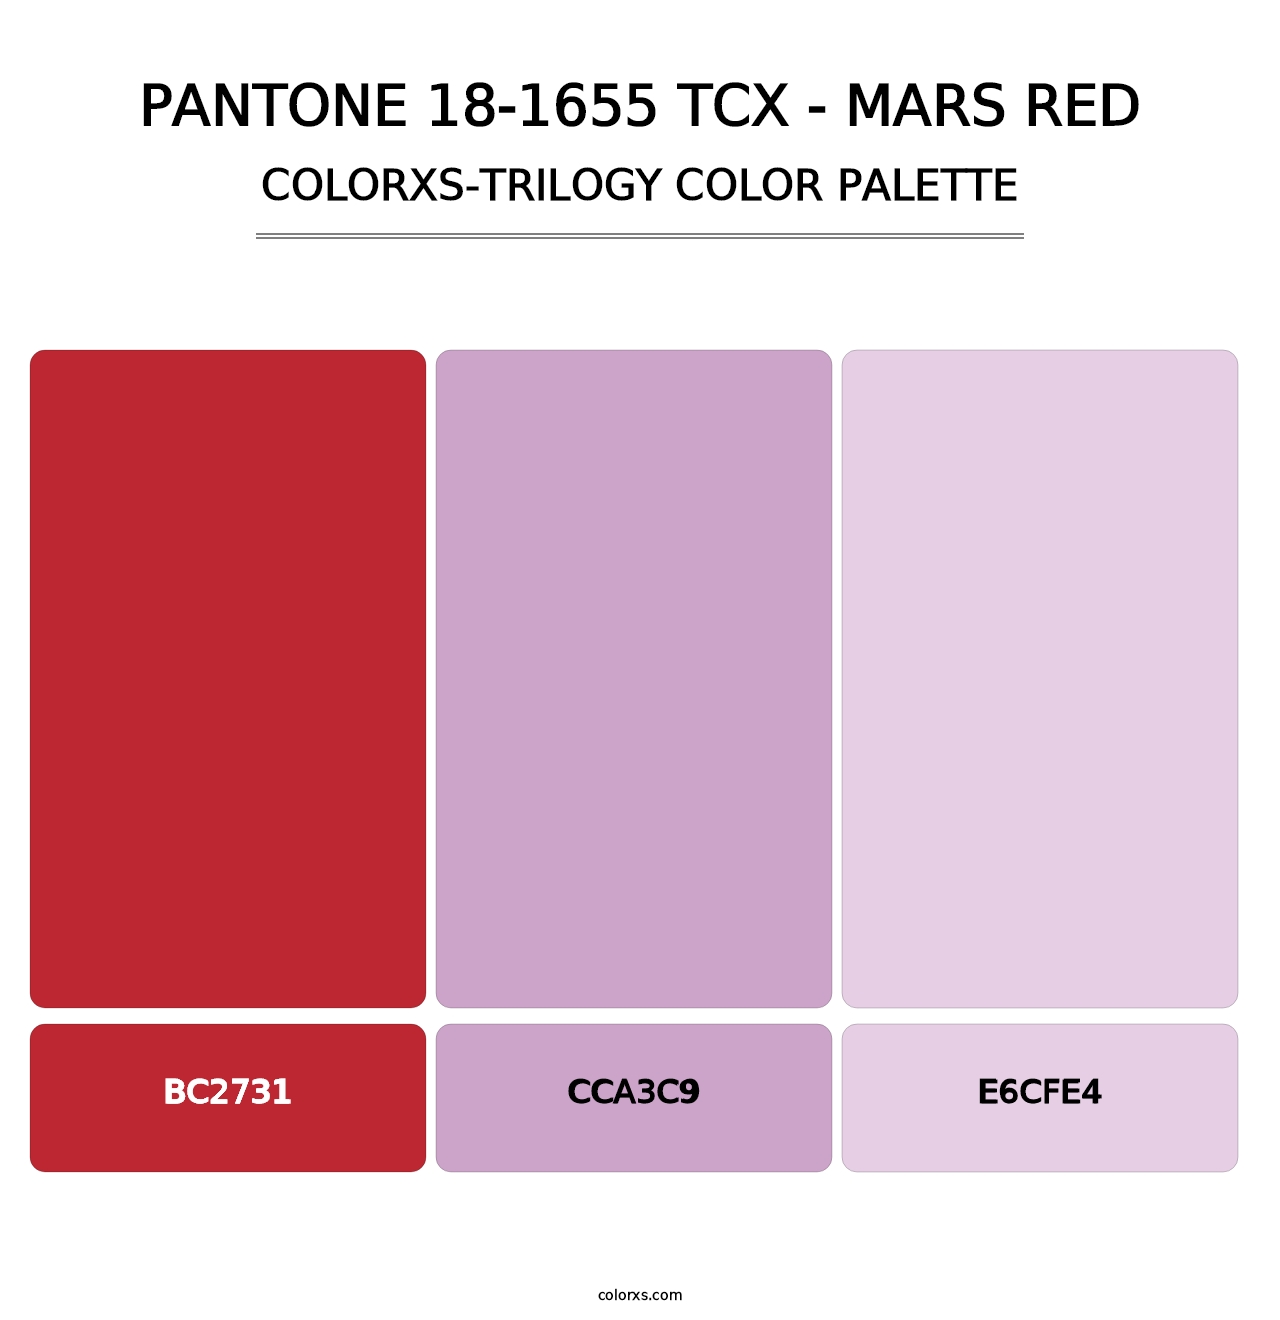 PANTONE 18-1655 TCX - Mars Red - Colorxs Trilogy Palette